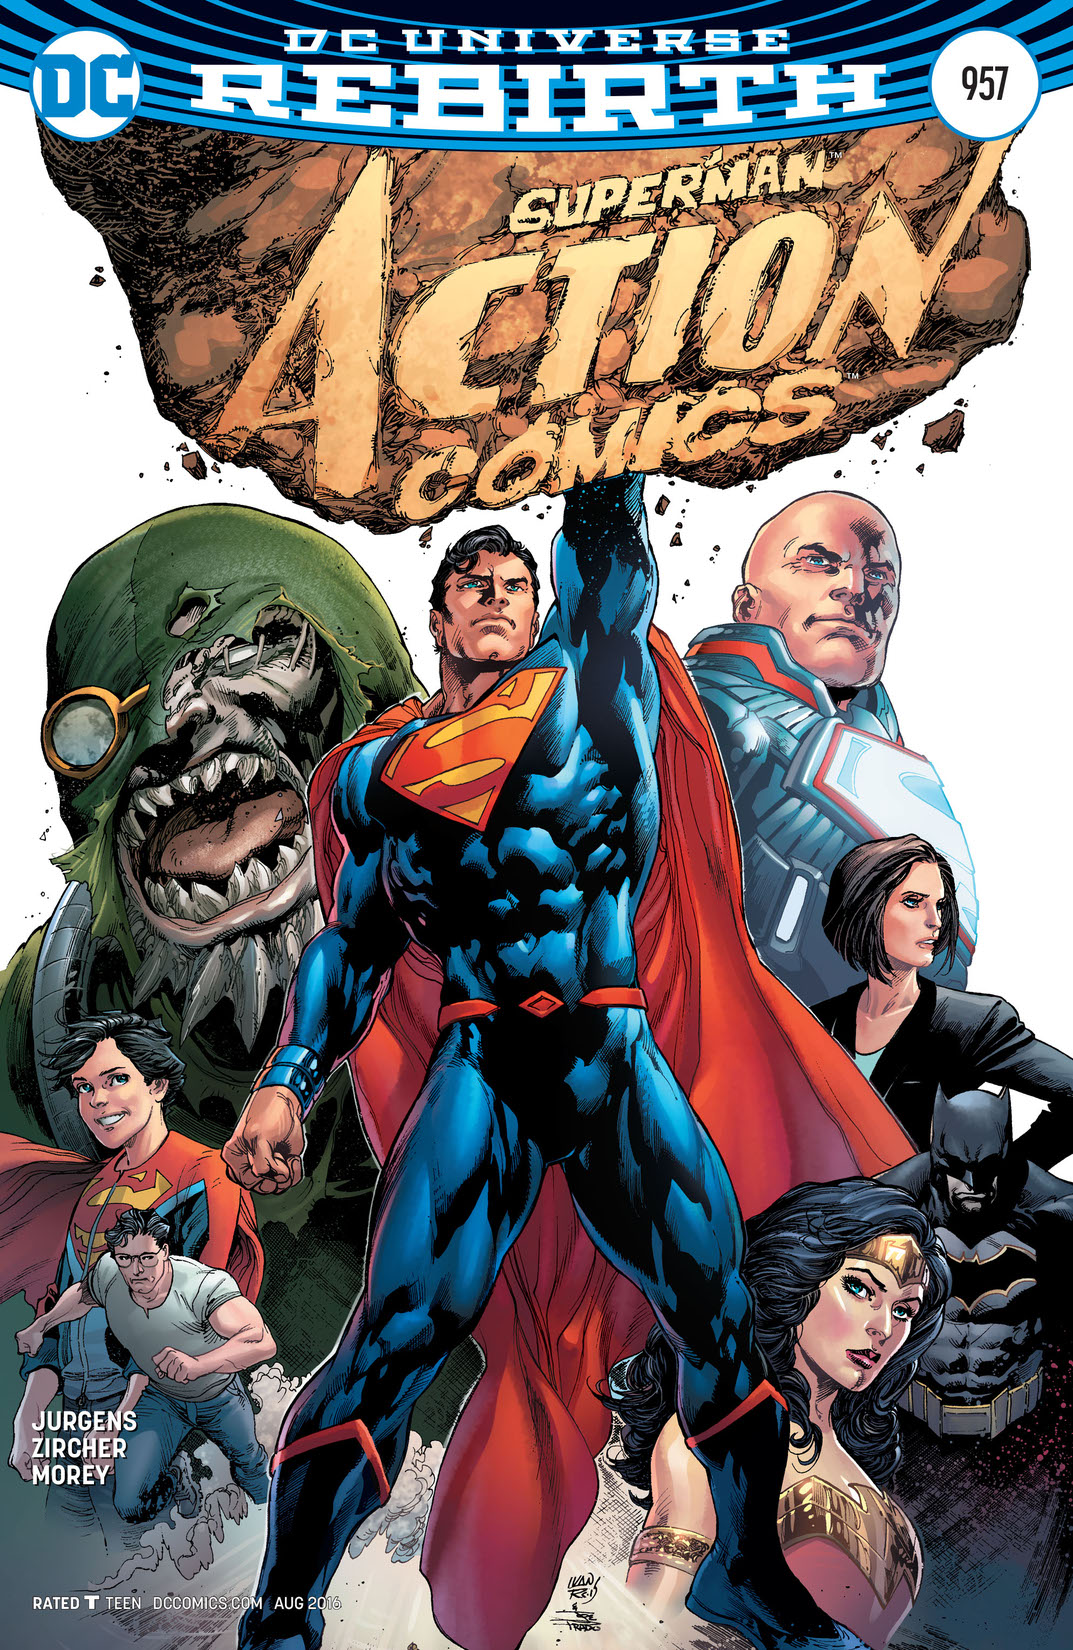 Action Comics (2016-) #957 preview images